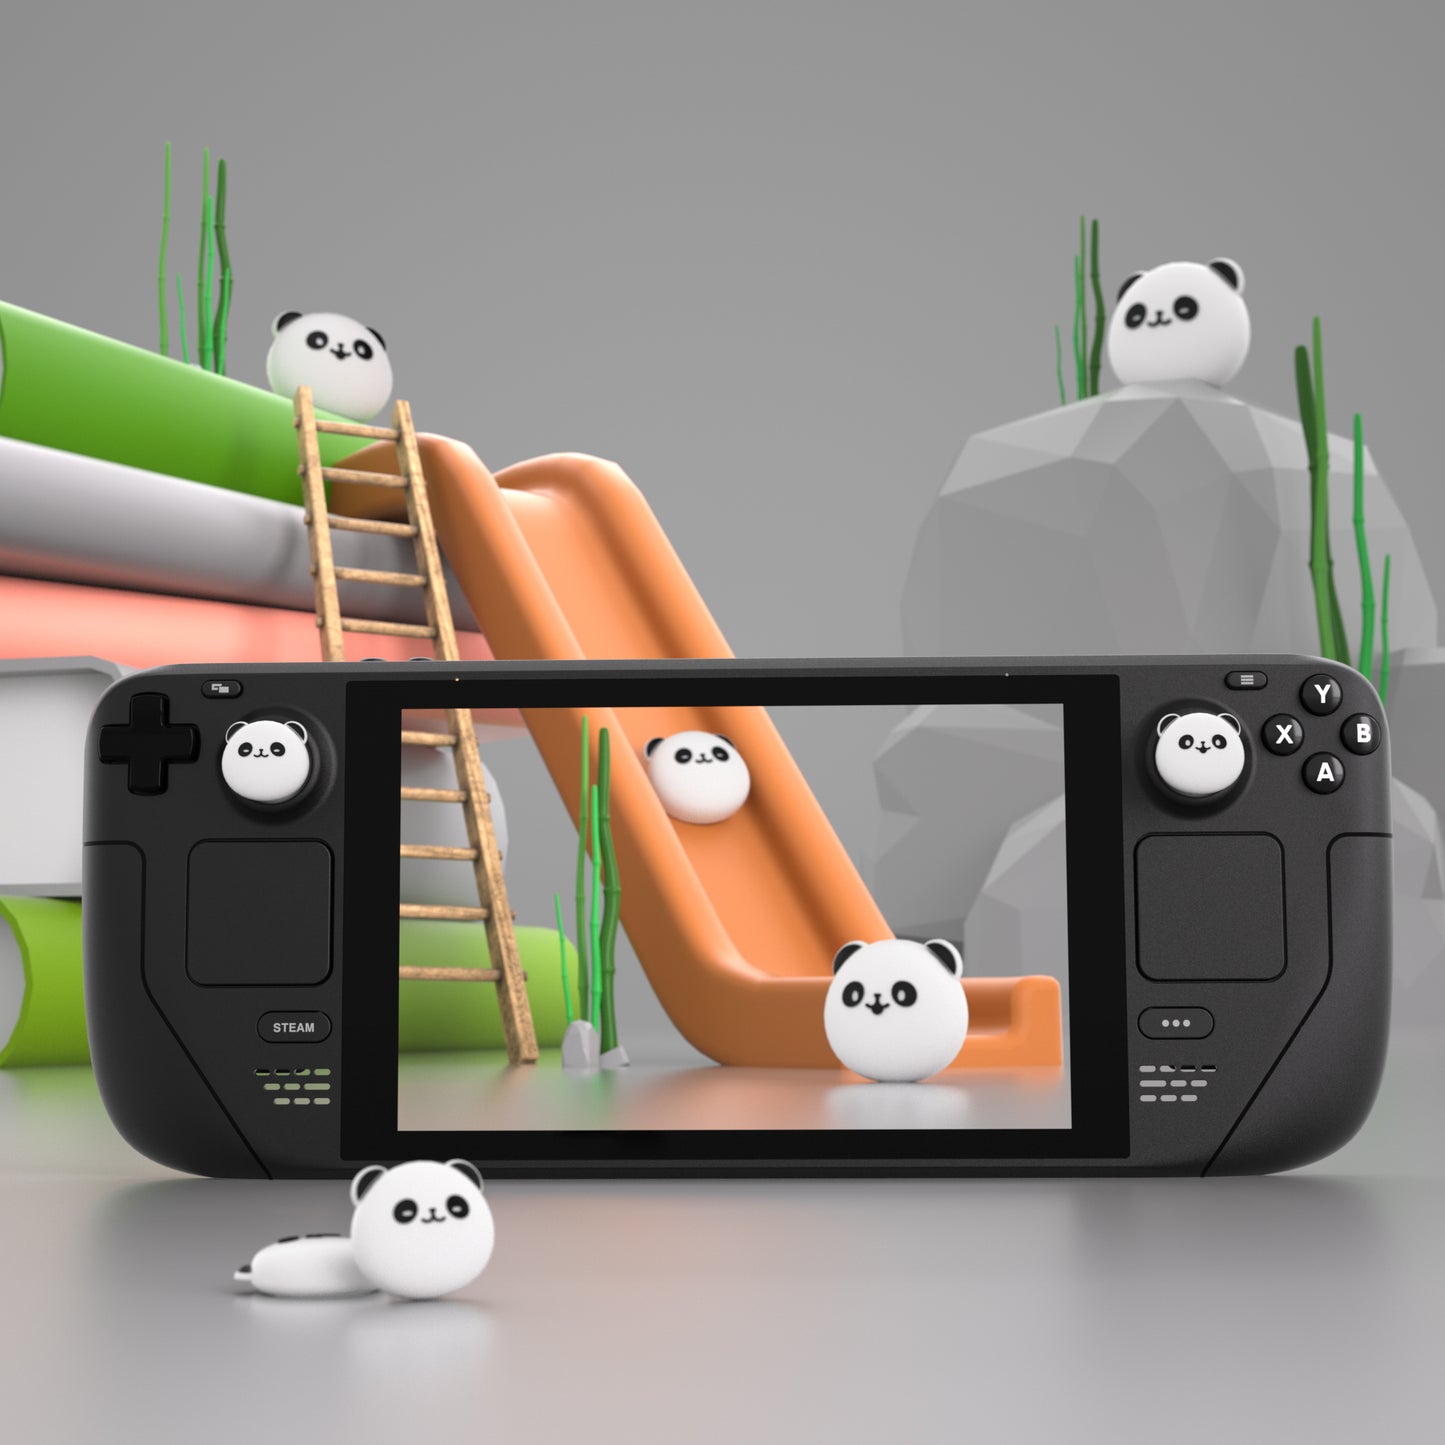 PlayVital Thumb Grip Caps for Steam Deck, Silicone Thumbsticks Grips Joystick Caps for Steam Deck - Chubby Panda - YFSDM008 PlayVital